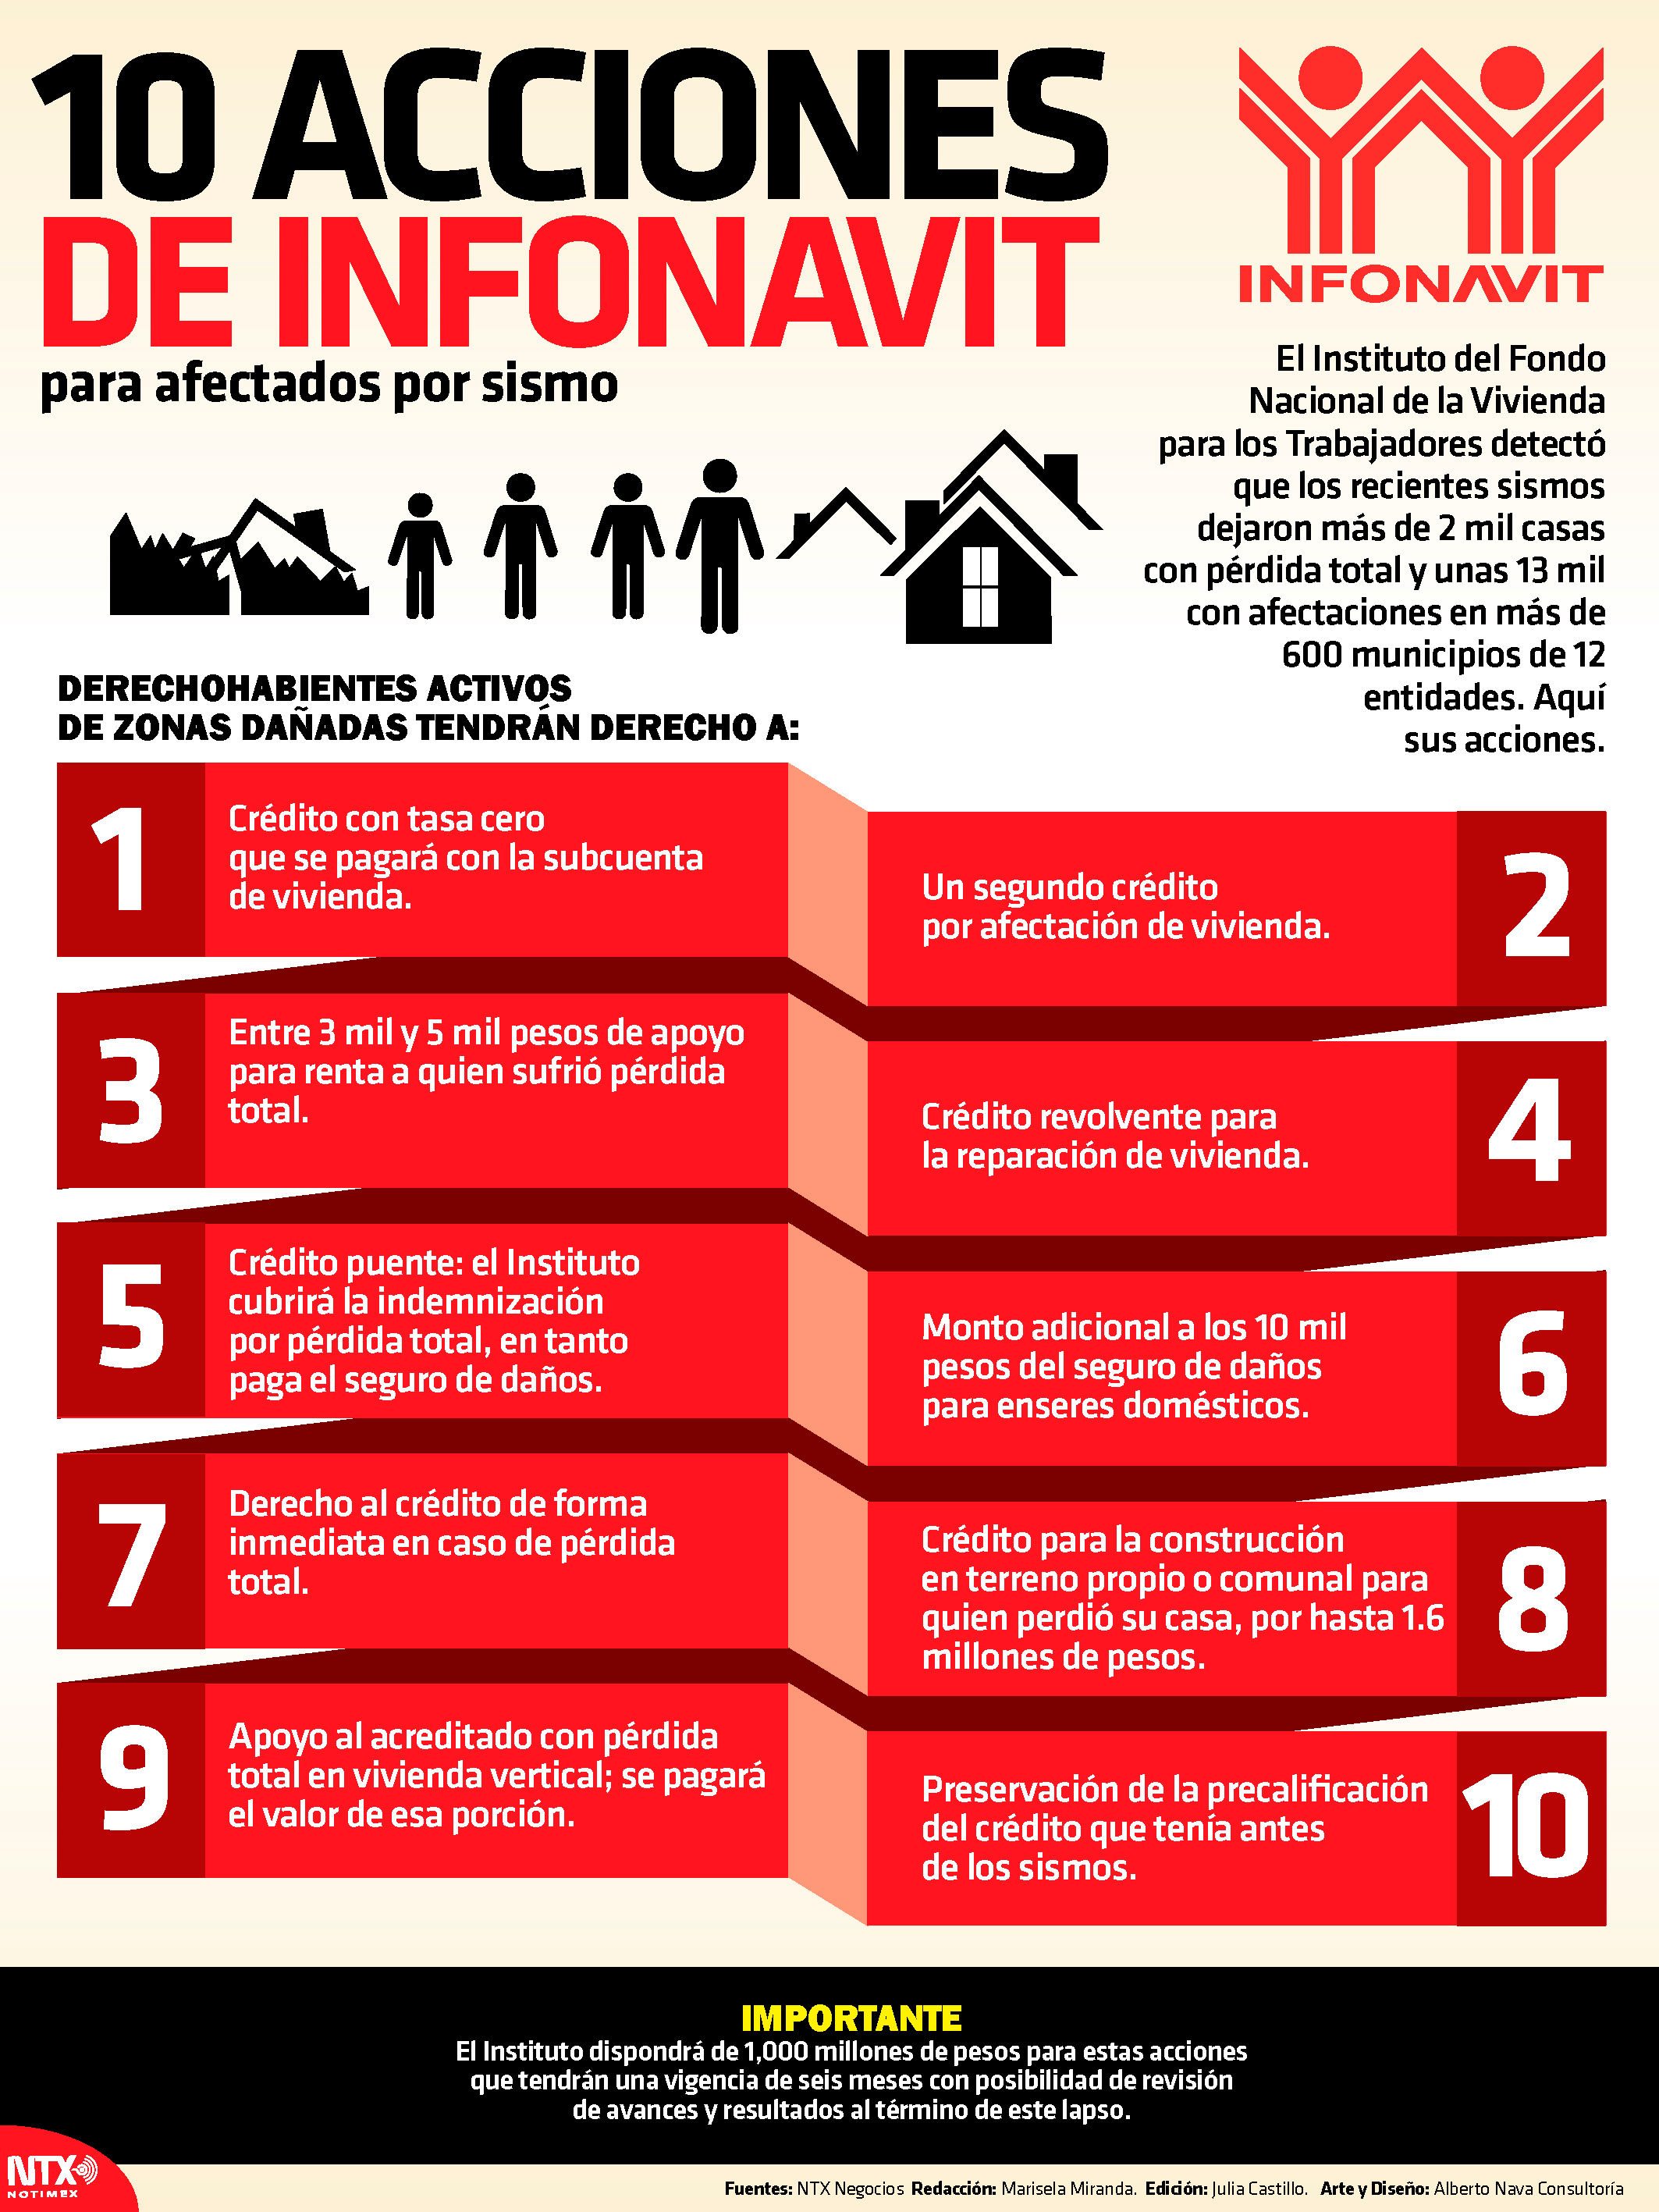 10 acciones de Infonavit